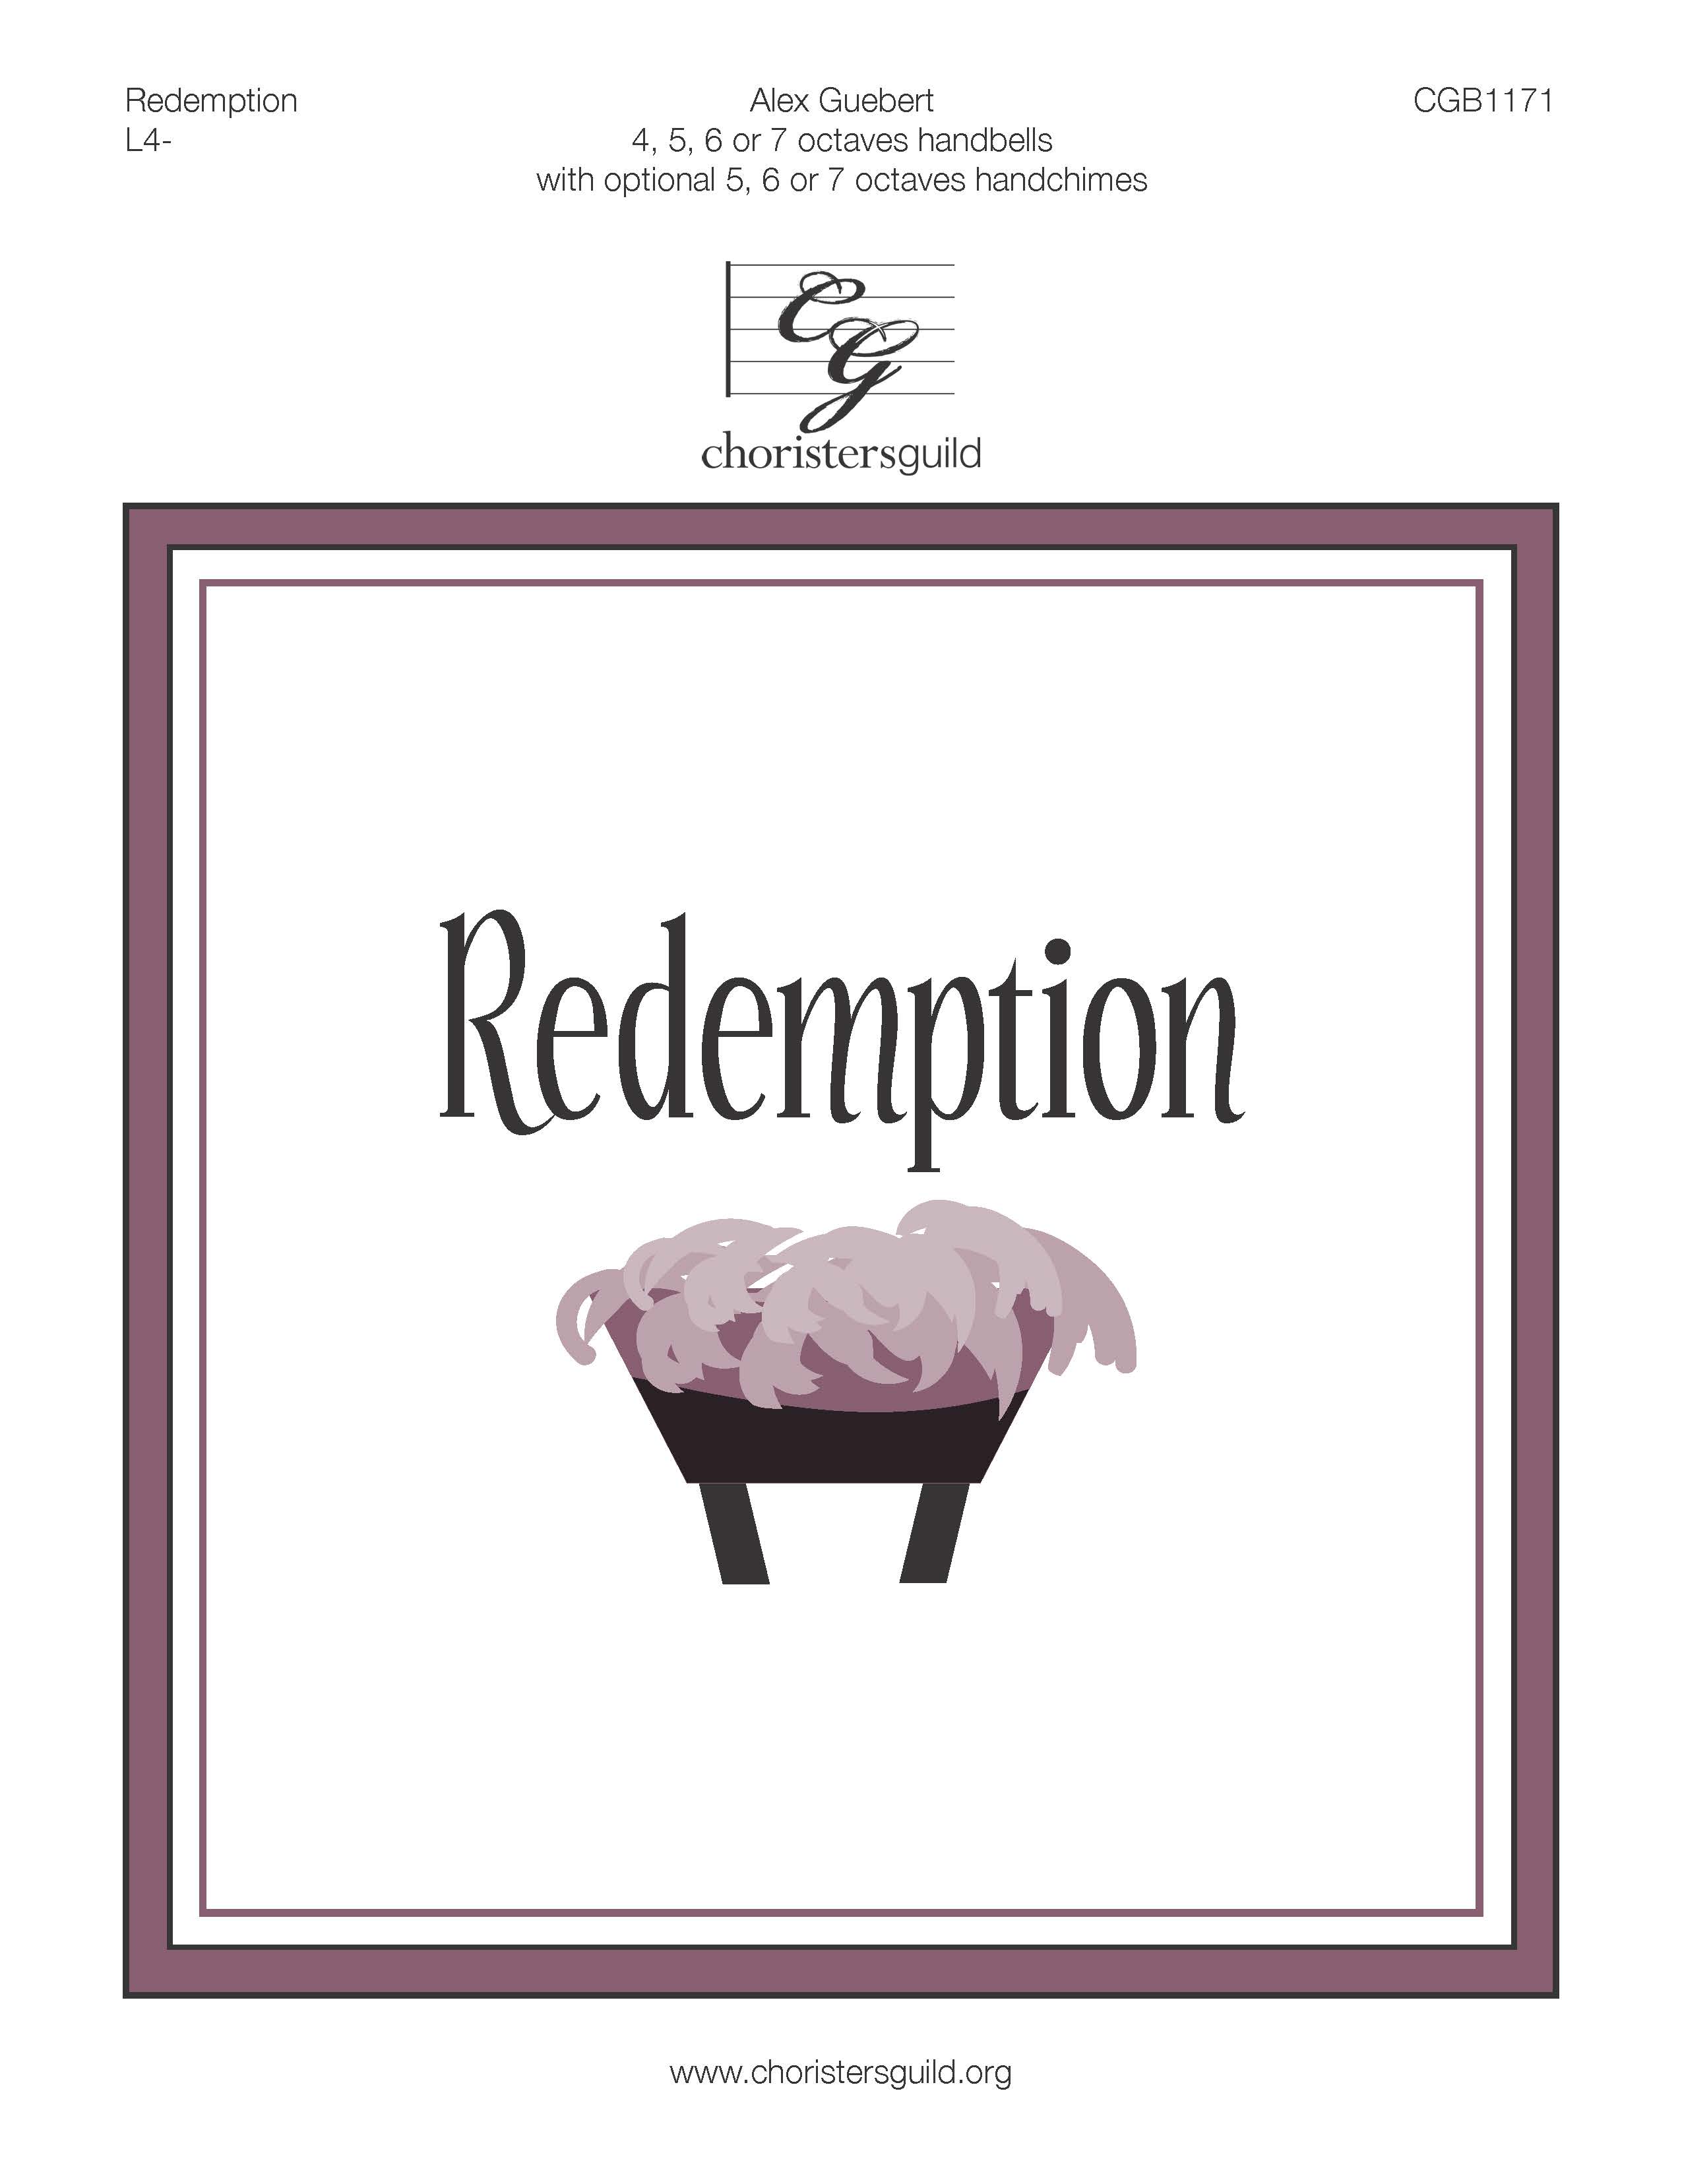 Redemption - 4-7 octaves